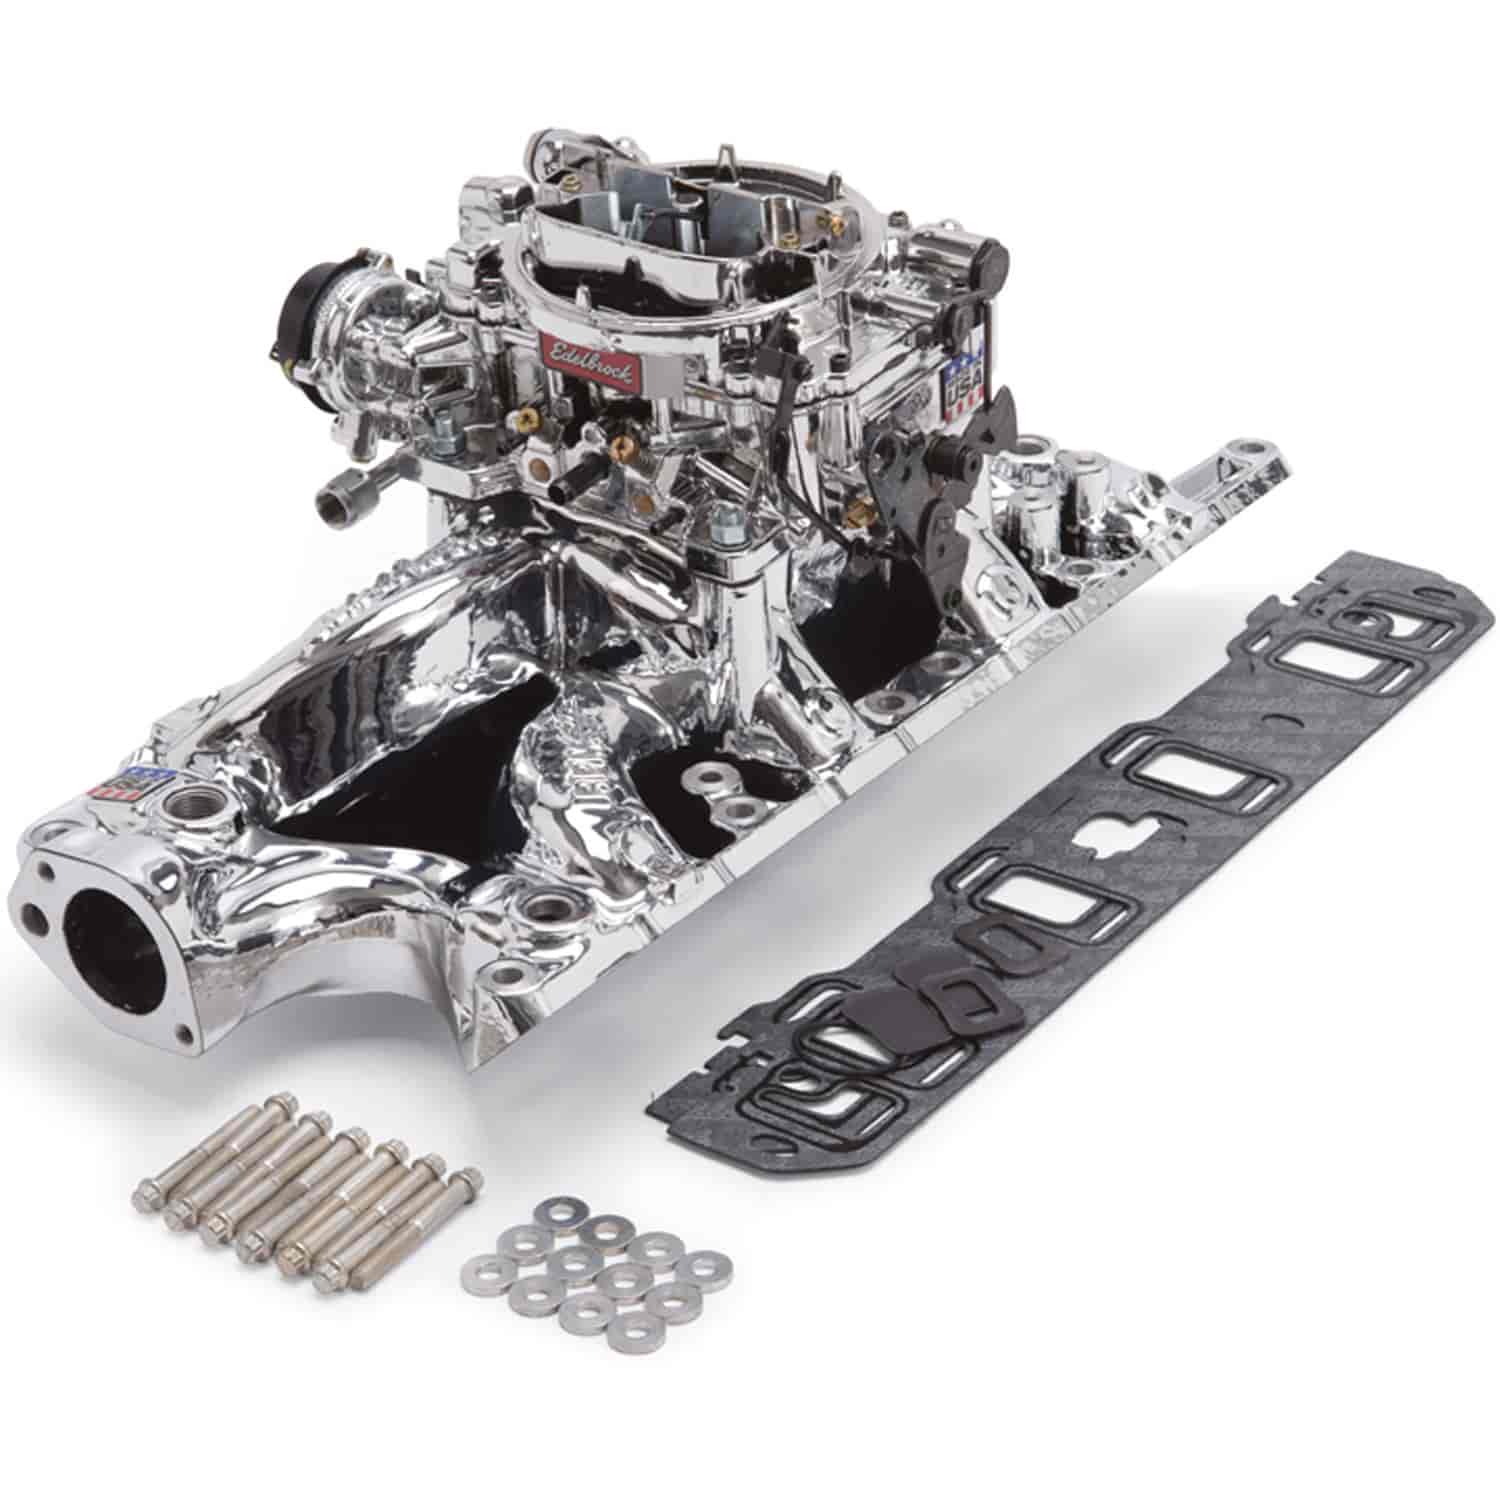 Single-Quad RPM Air-Gap Manifold and Carburetor Kit for Small Block Ford 260-302 with Endurashine Finish